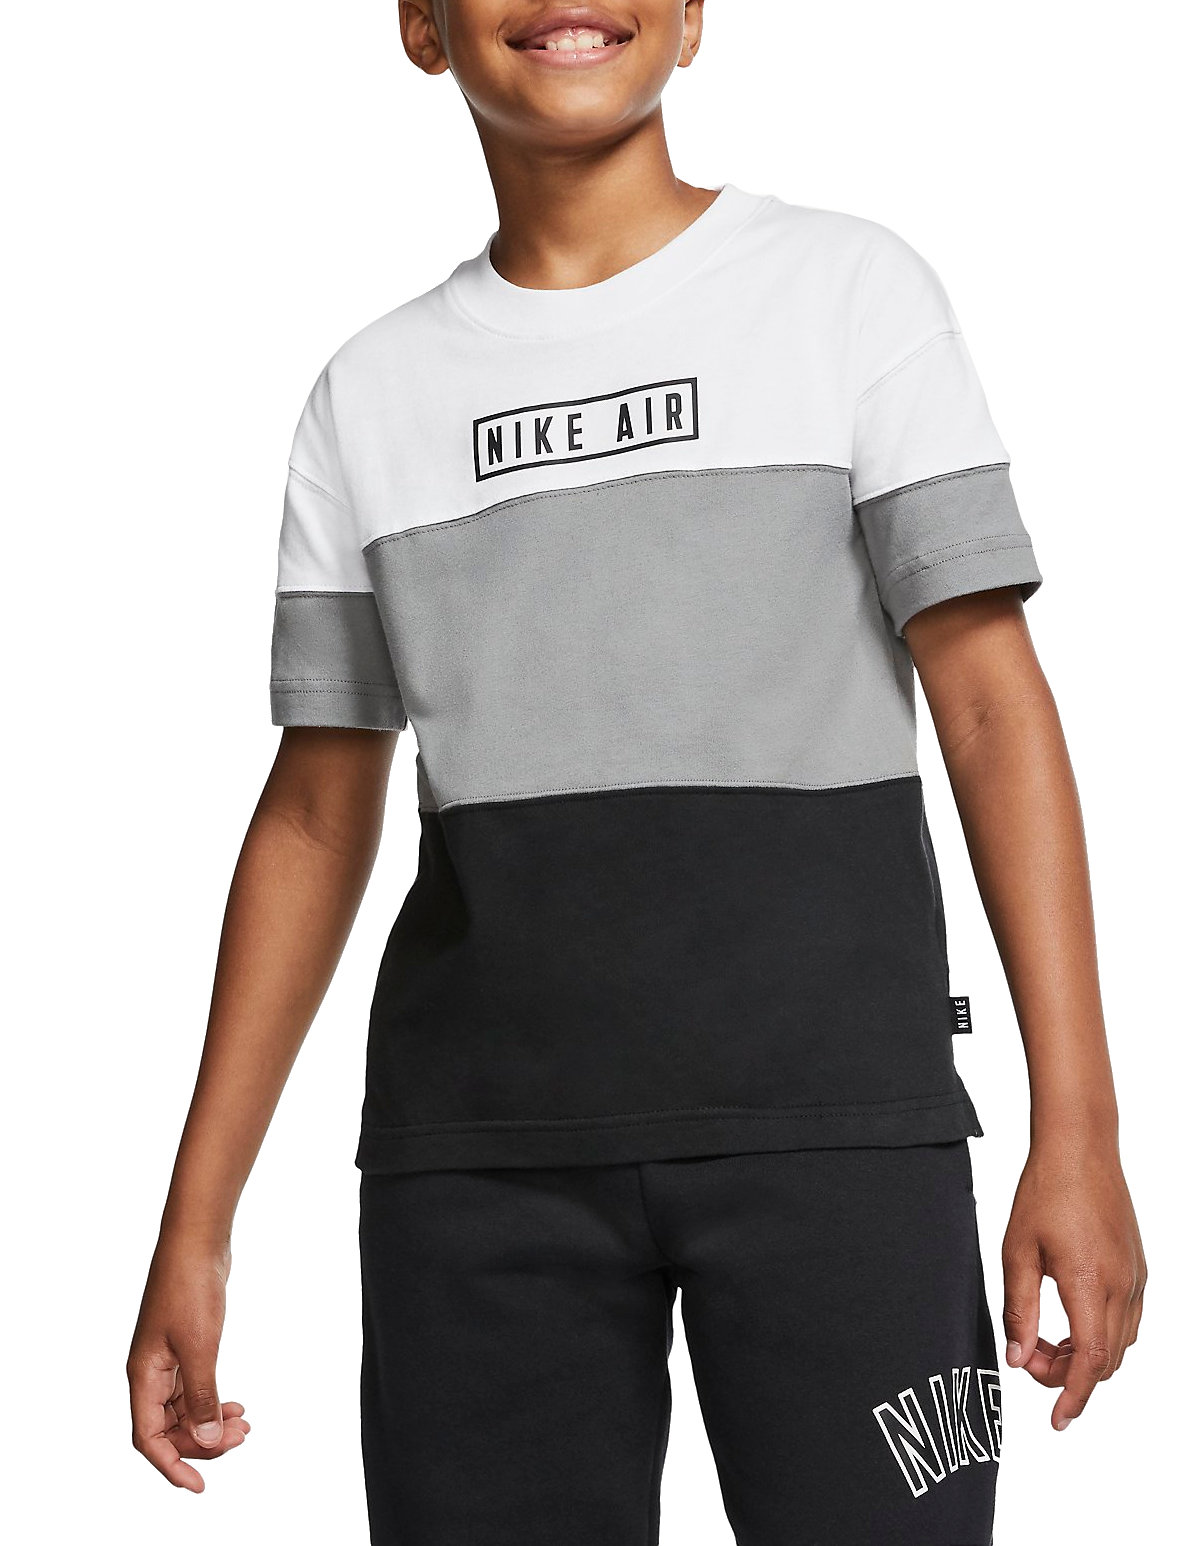 Dětské tričko s krátkým rukávem Nike Air